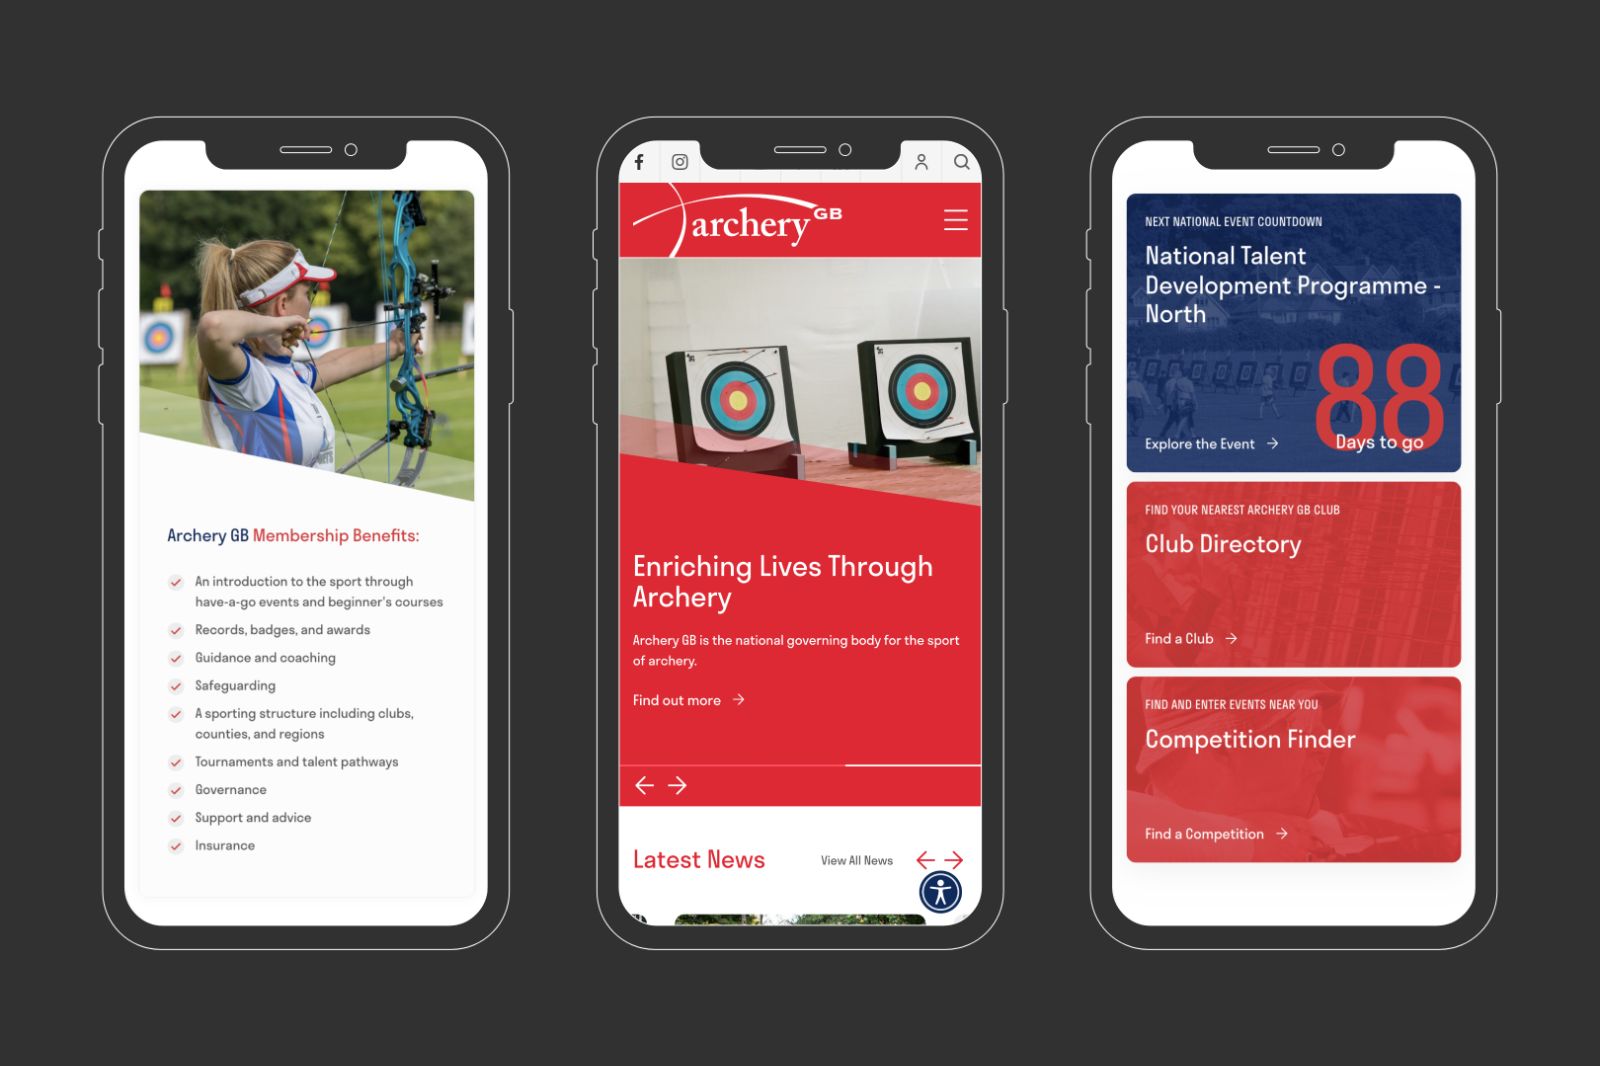 Archery GB Mobile-Friendly Website Design